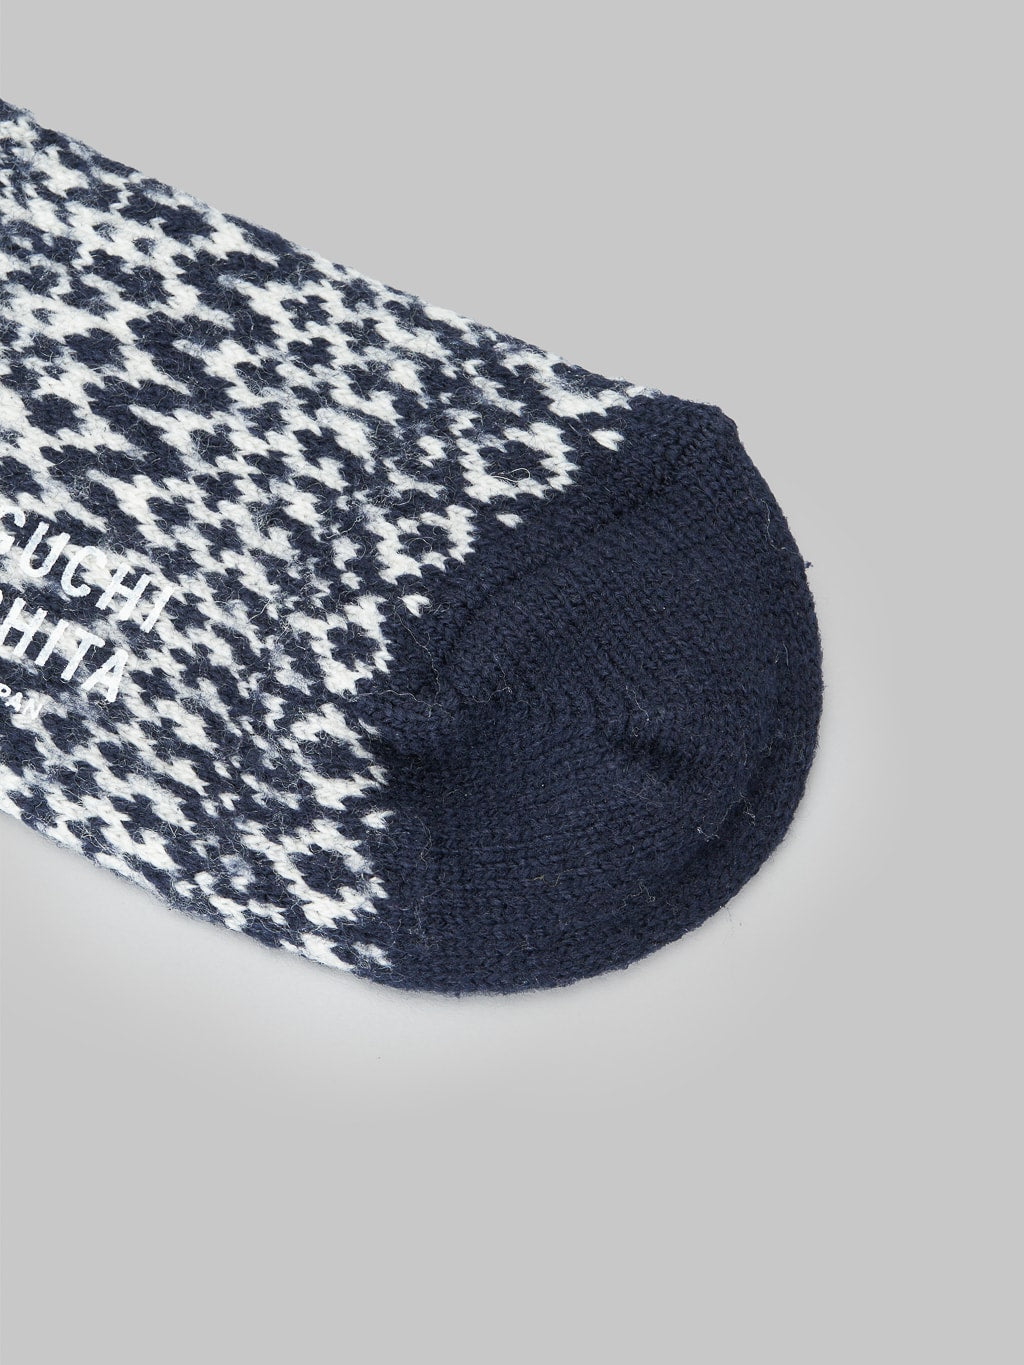 Nishiguchi Kutsushita Wool Jacquard Socks Berlin Blue fabric texture